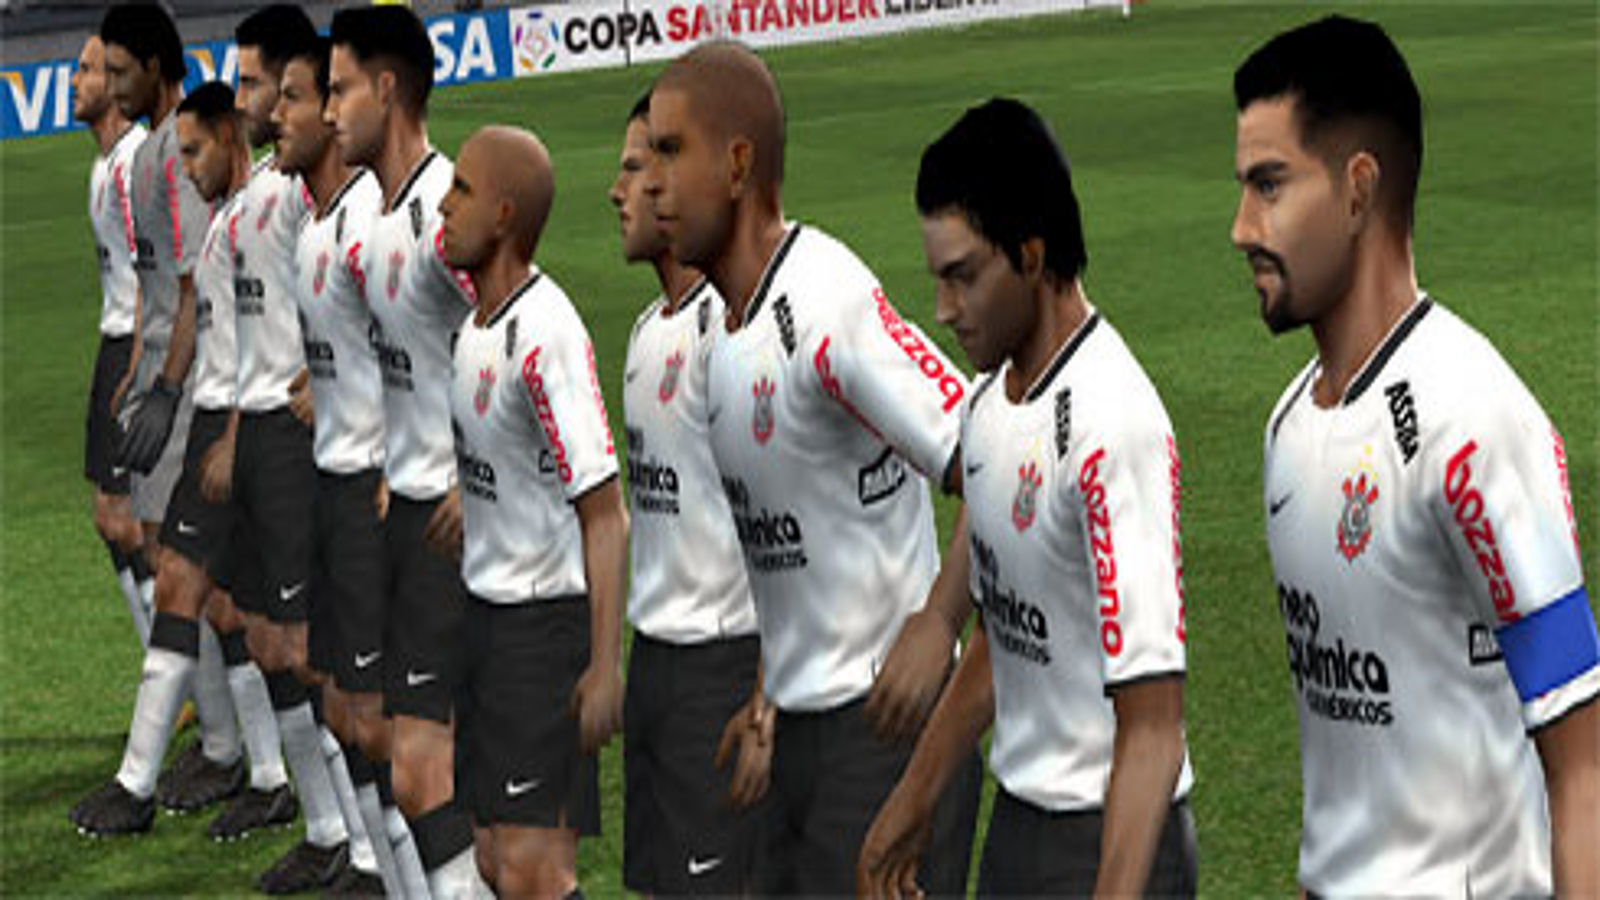 Pro Evolution Soccer 2011 PC Game - Free Download Full Version